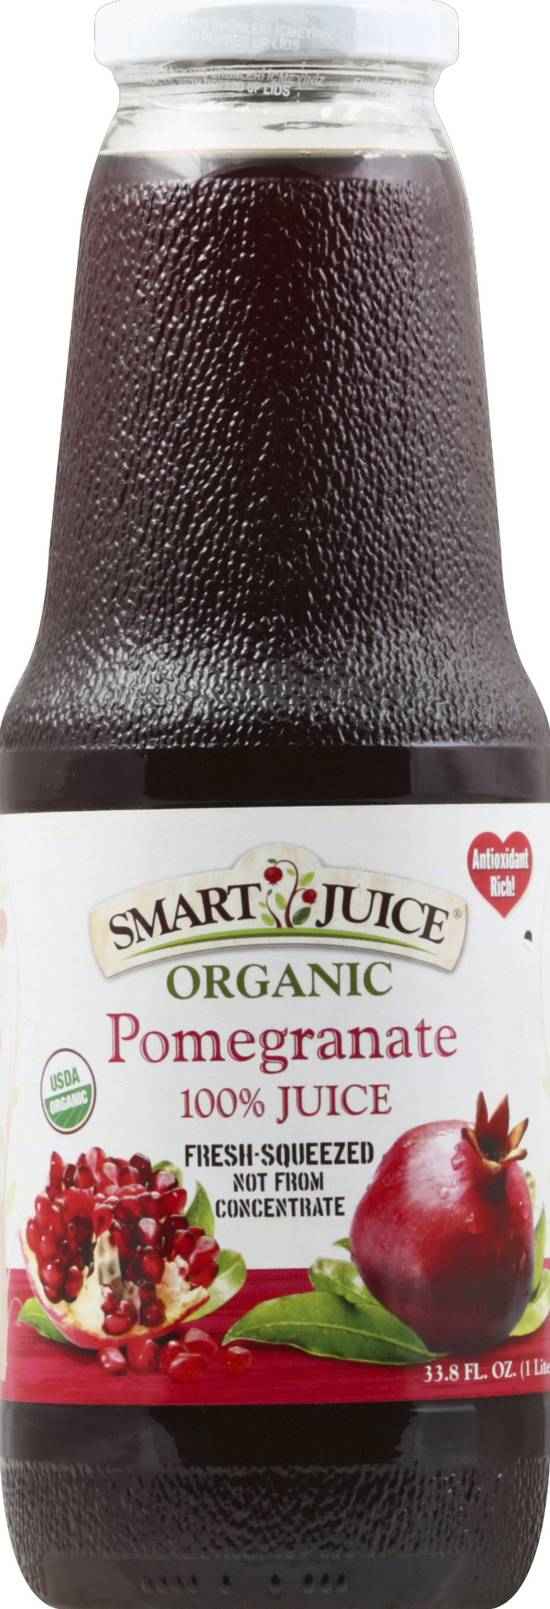 Smart Juice Organic Pomegranate Juice (33.8 fl oz)